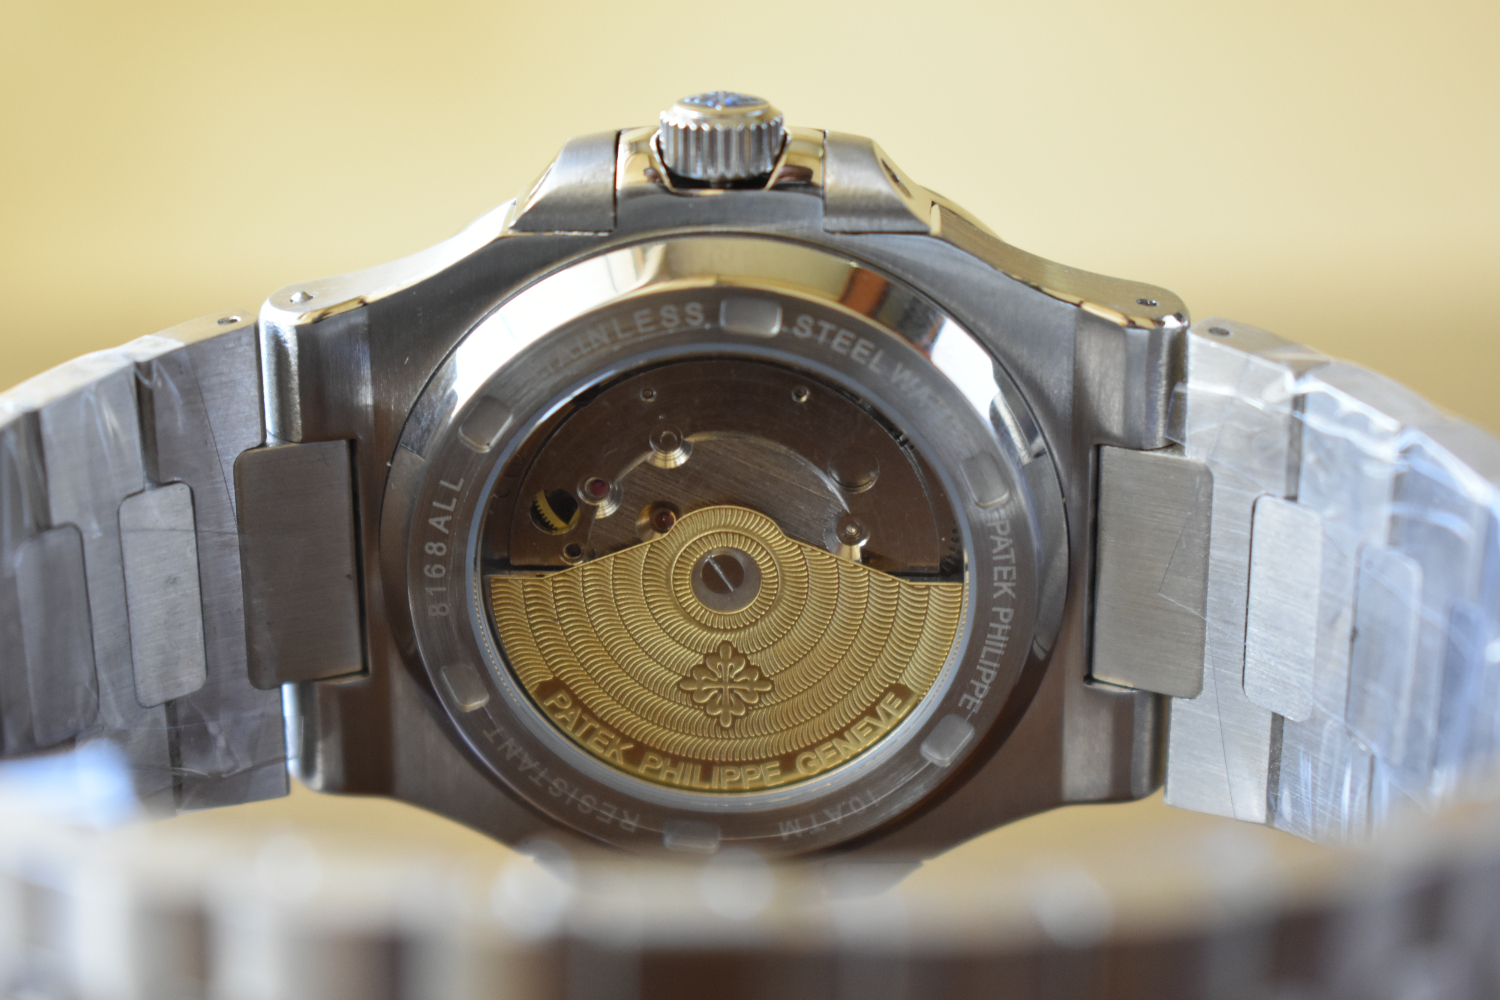 Patek Philippe Nautilus Ruby 5711/112 P Watch for sale in Nairobi,Kenya.